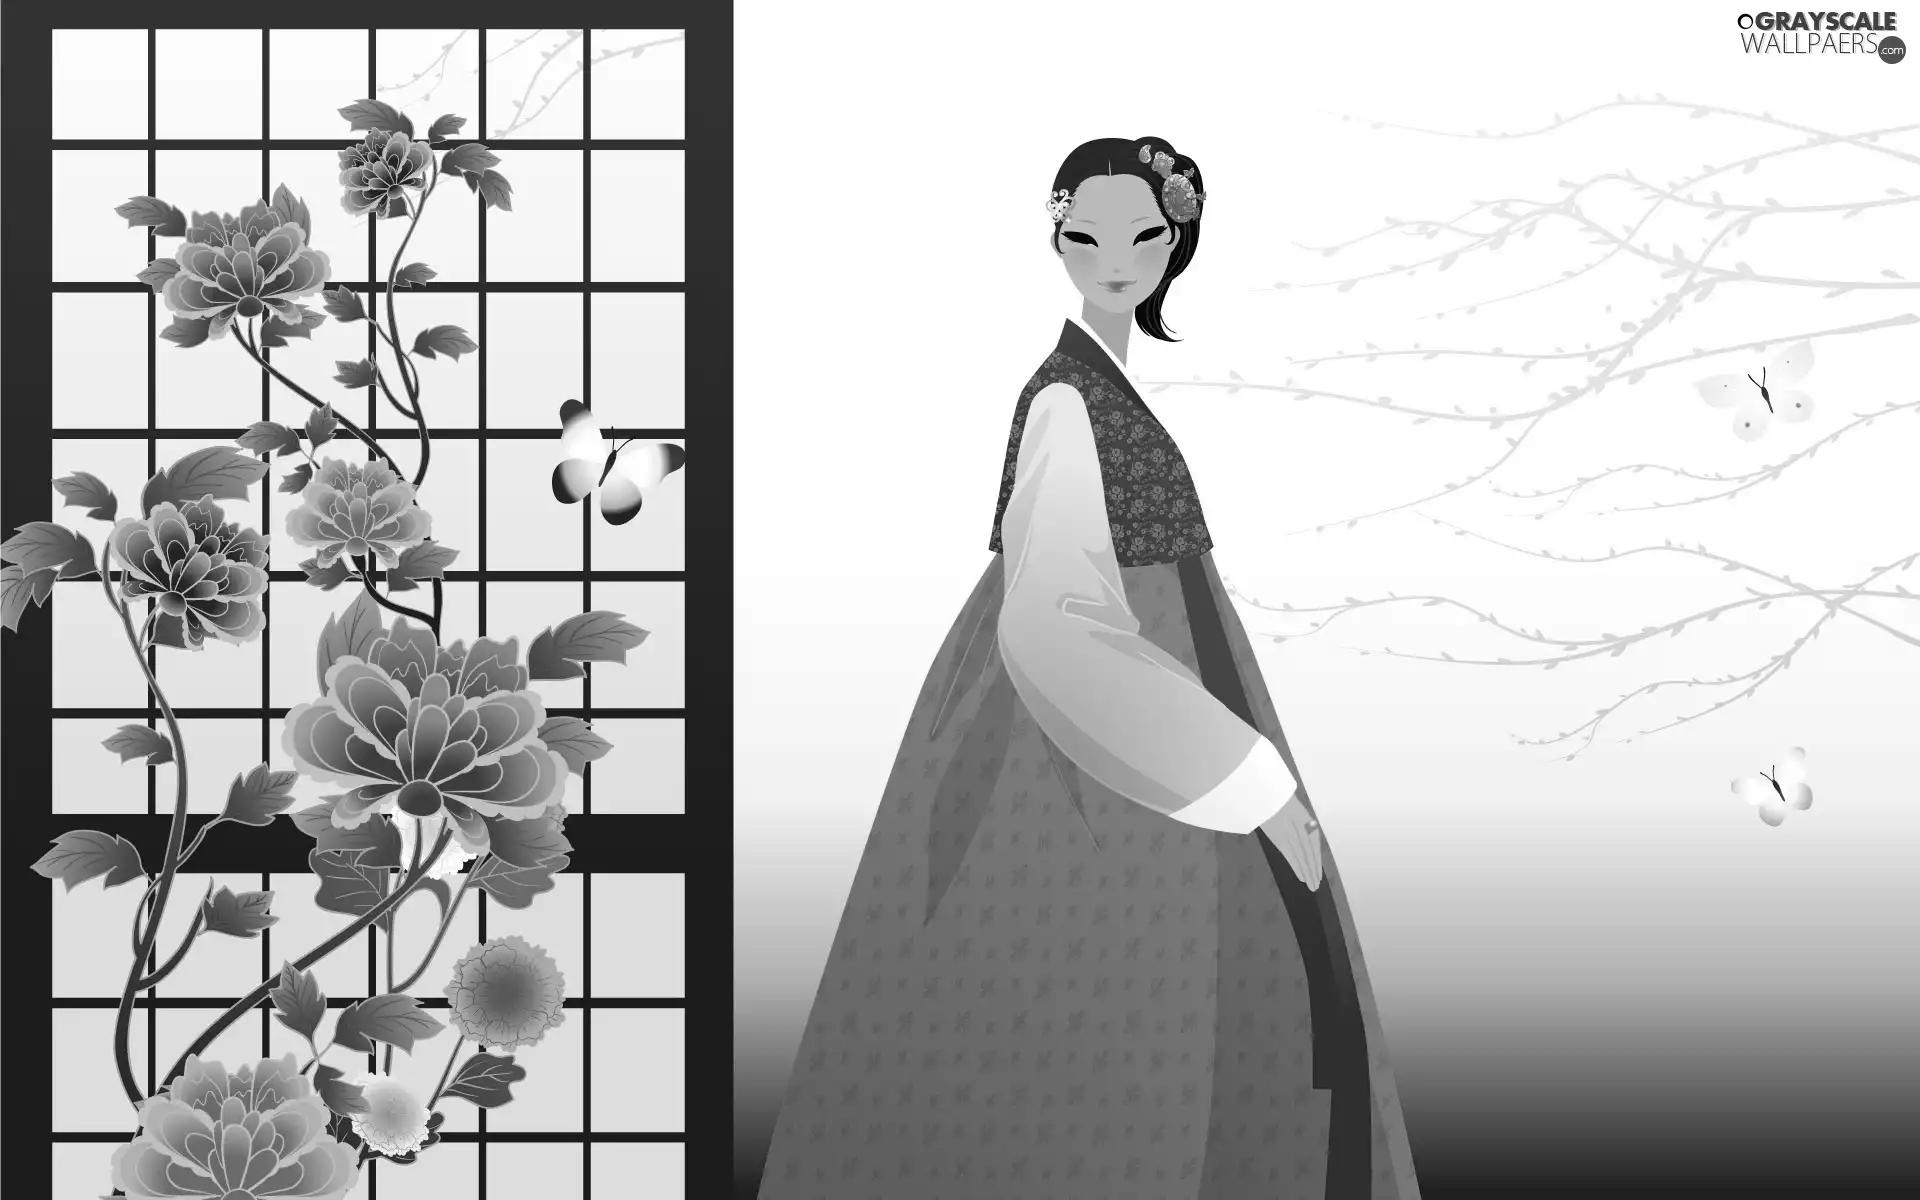 Flowers, Women, Japanese